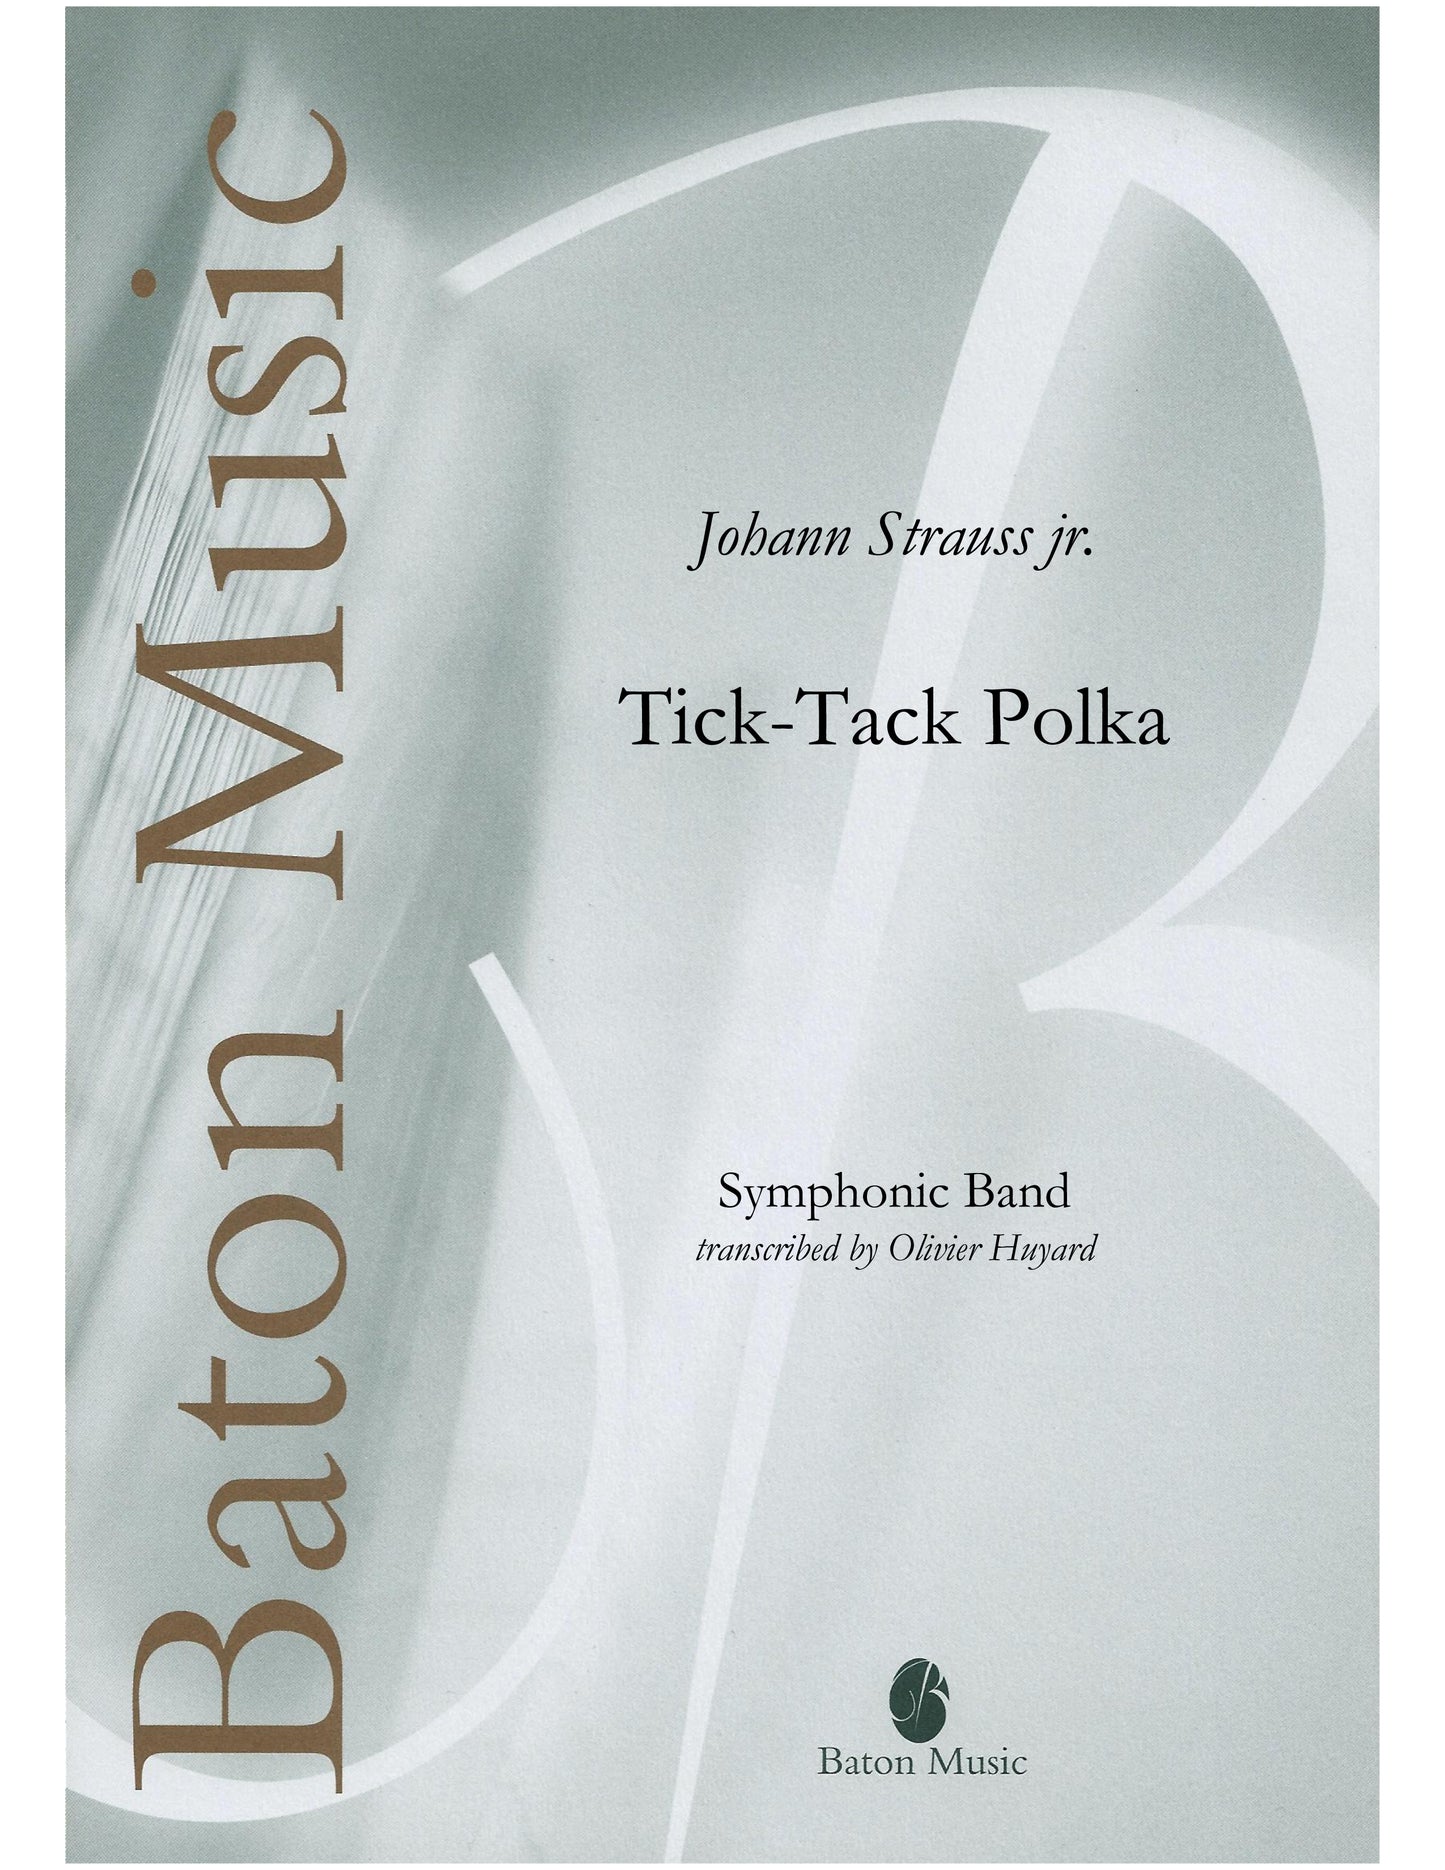 Tick-Tack Polka - Johann Strauss